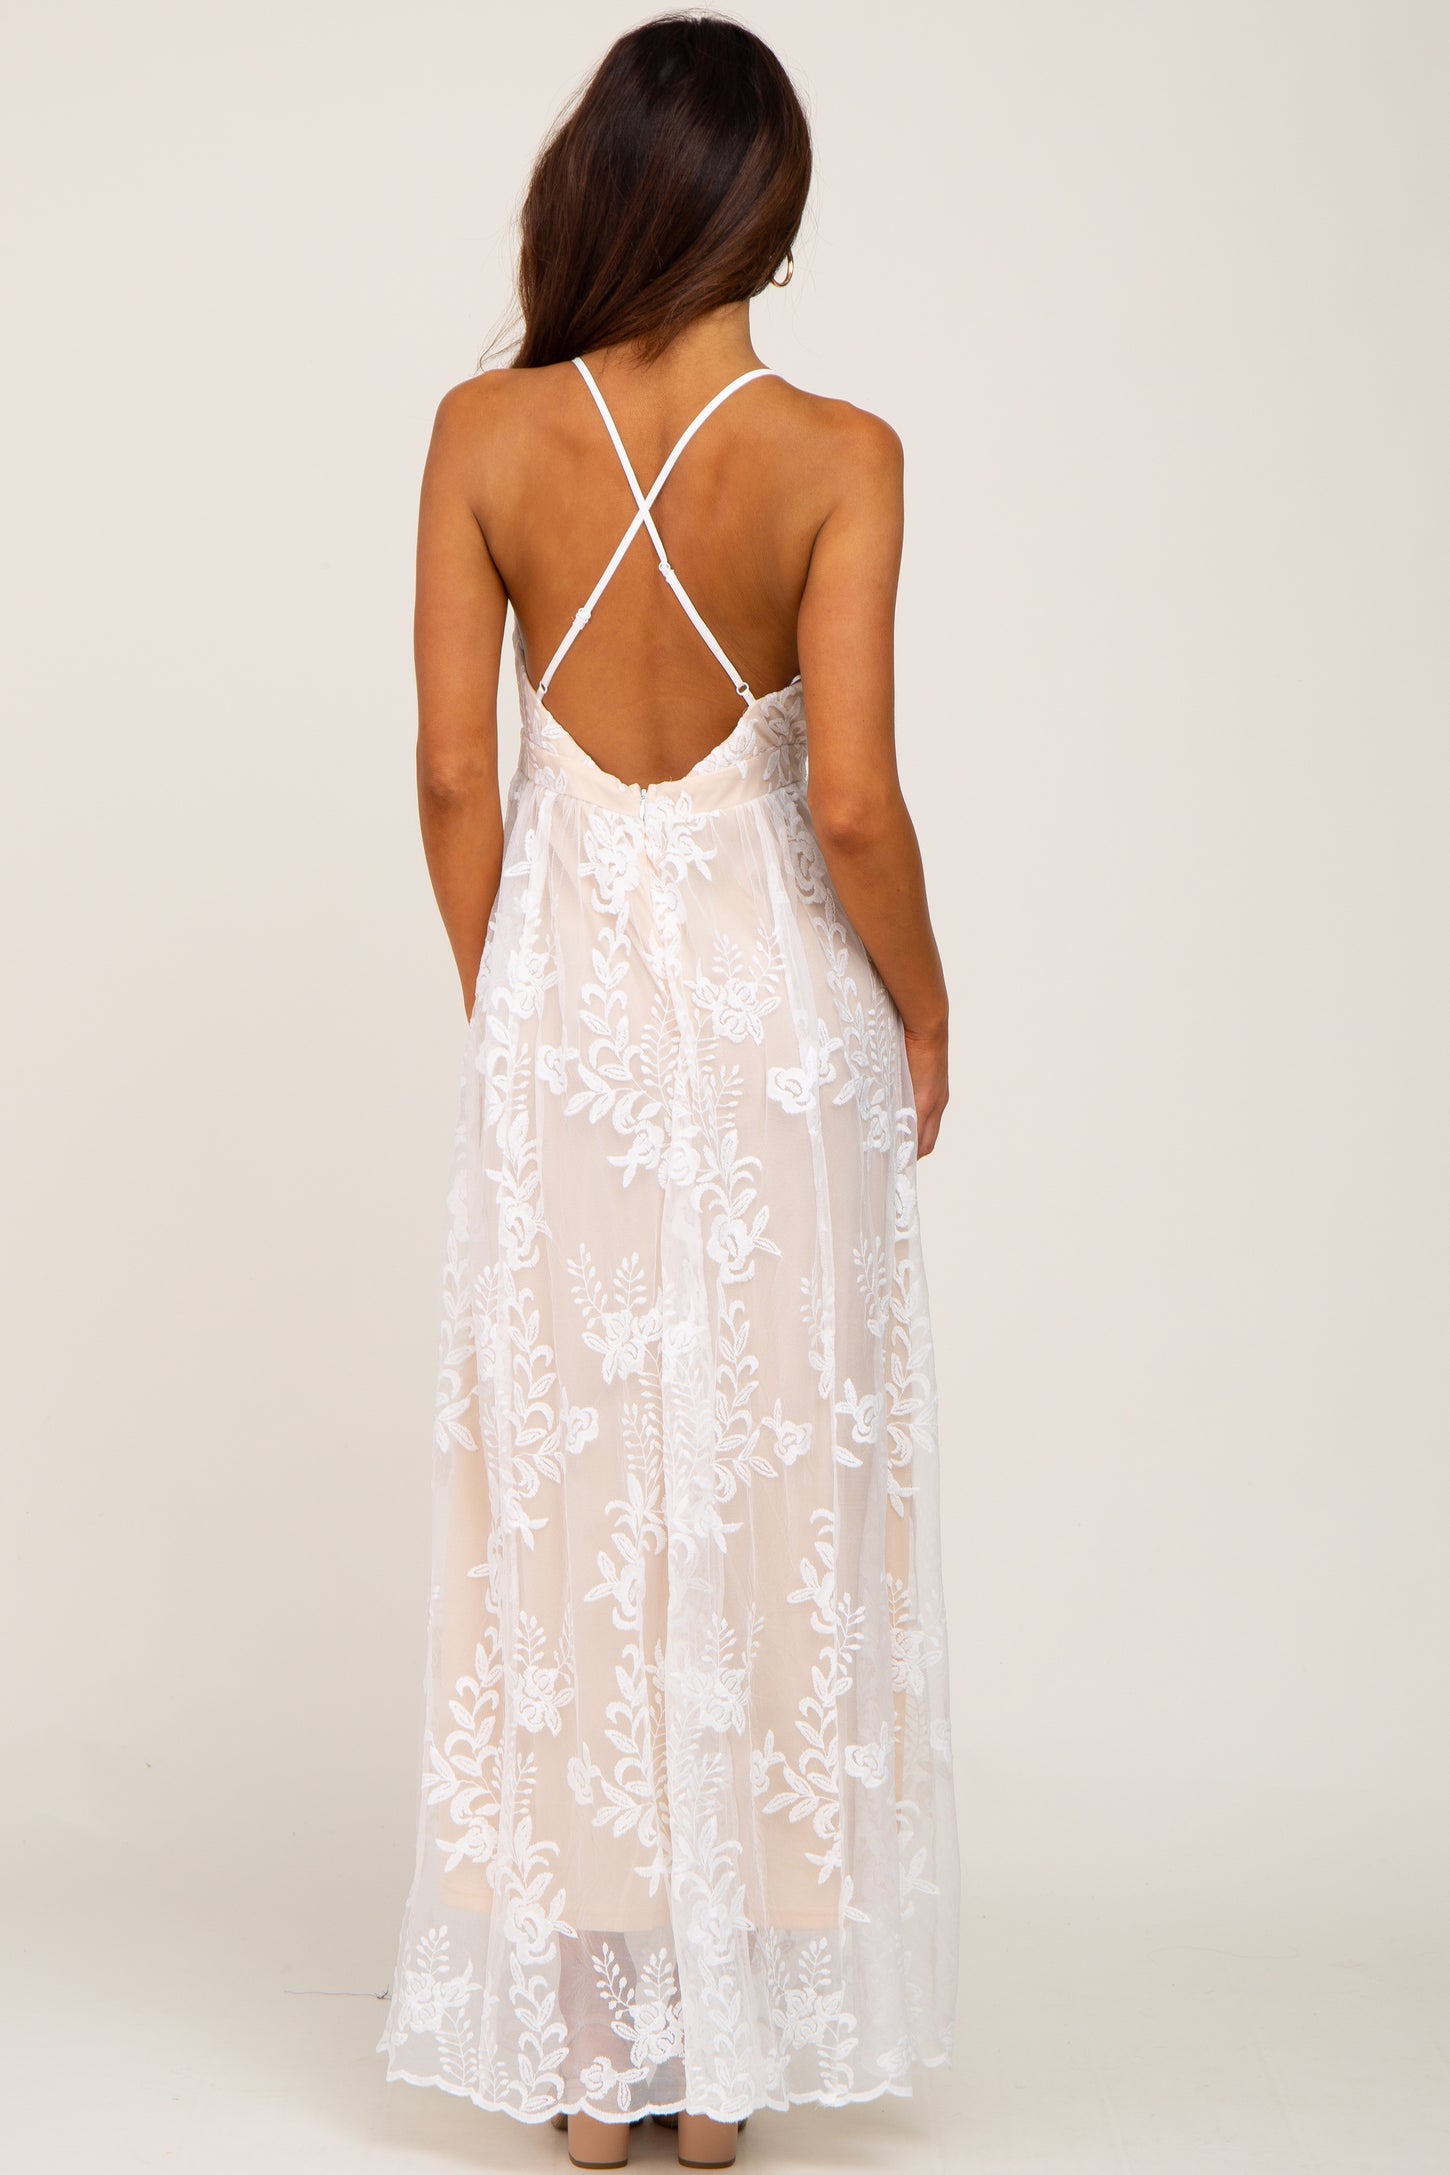 Ivory Lace Overlay Deep V-Neck Maxi Dress